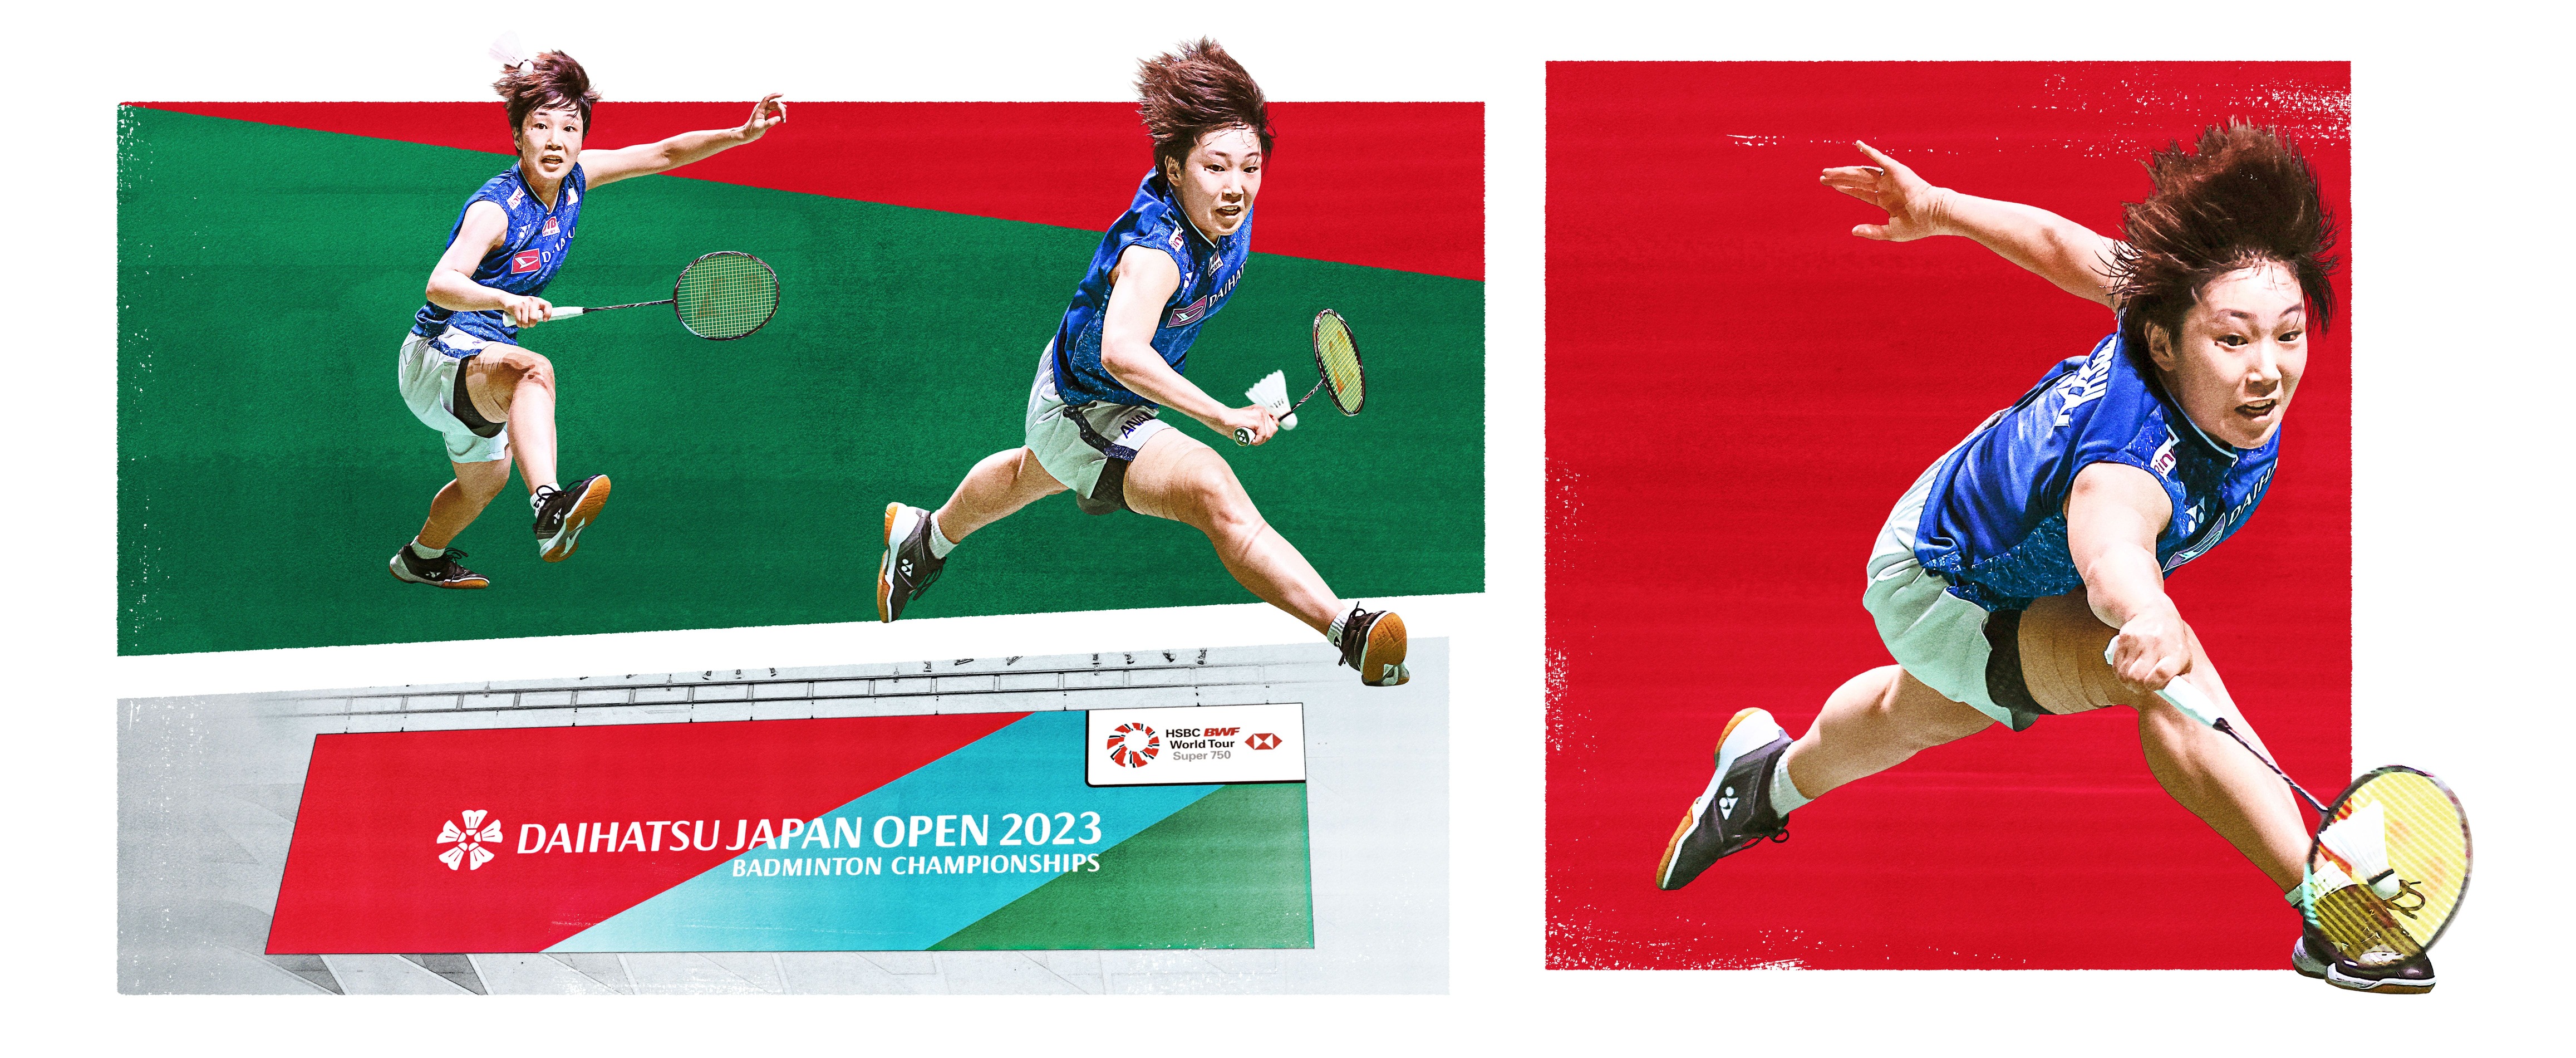 DAIHATSU JAPAN OPEN 2023 BADMINTON CHAMPIONSHIPS PART OF THE HSBC BWF World Tour Super 750